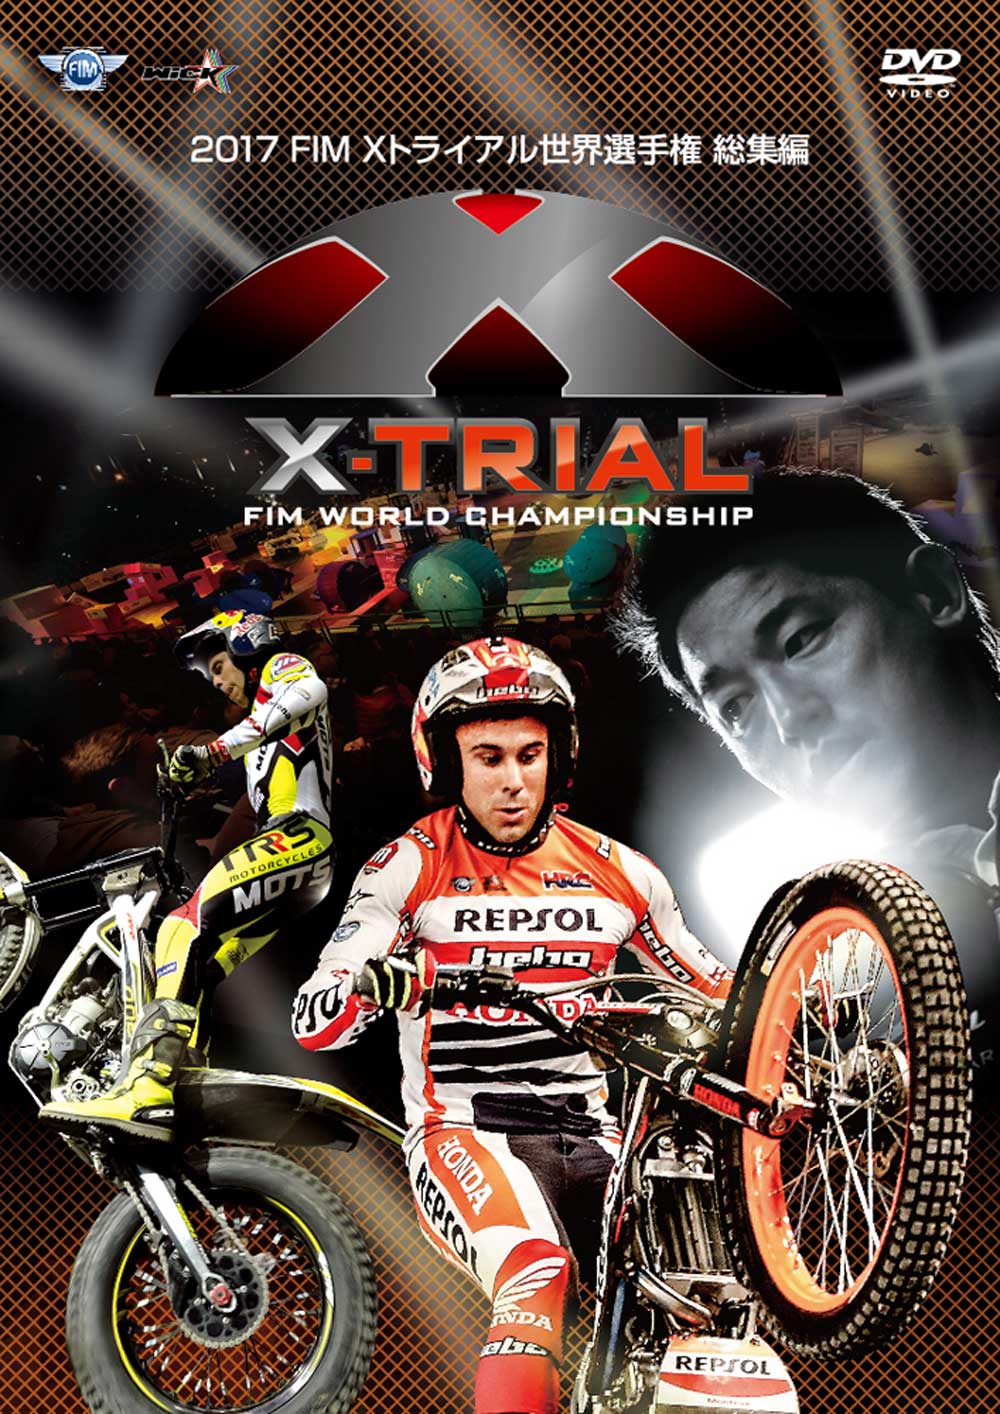 2017 X-TRIAL DVD